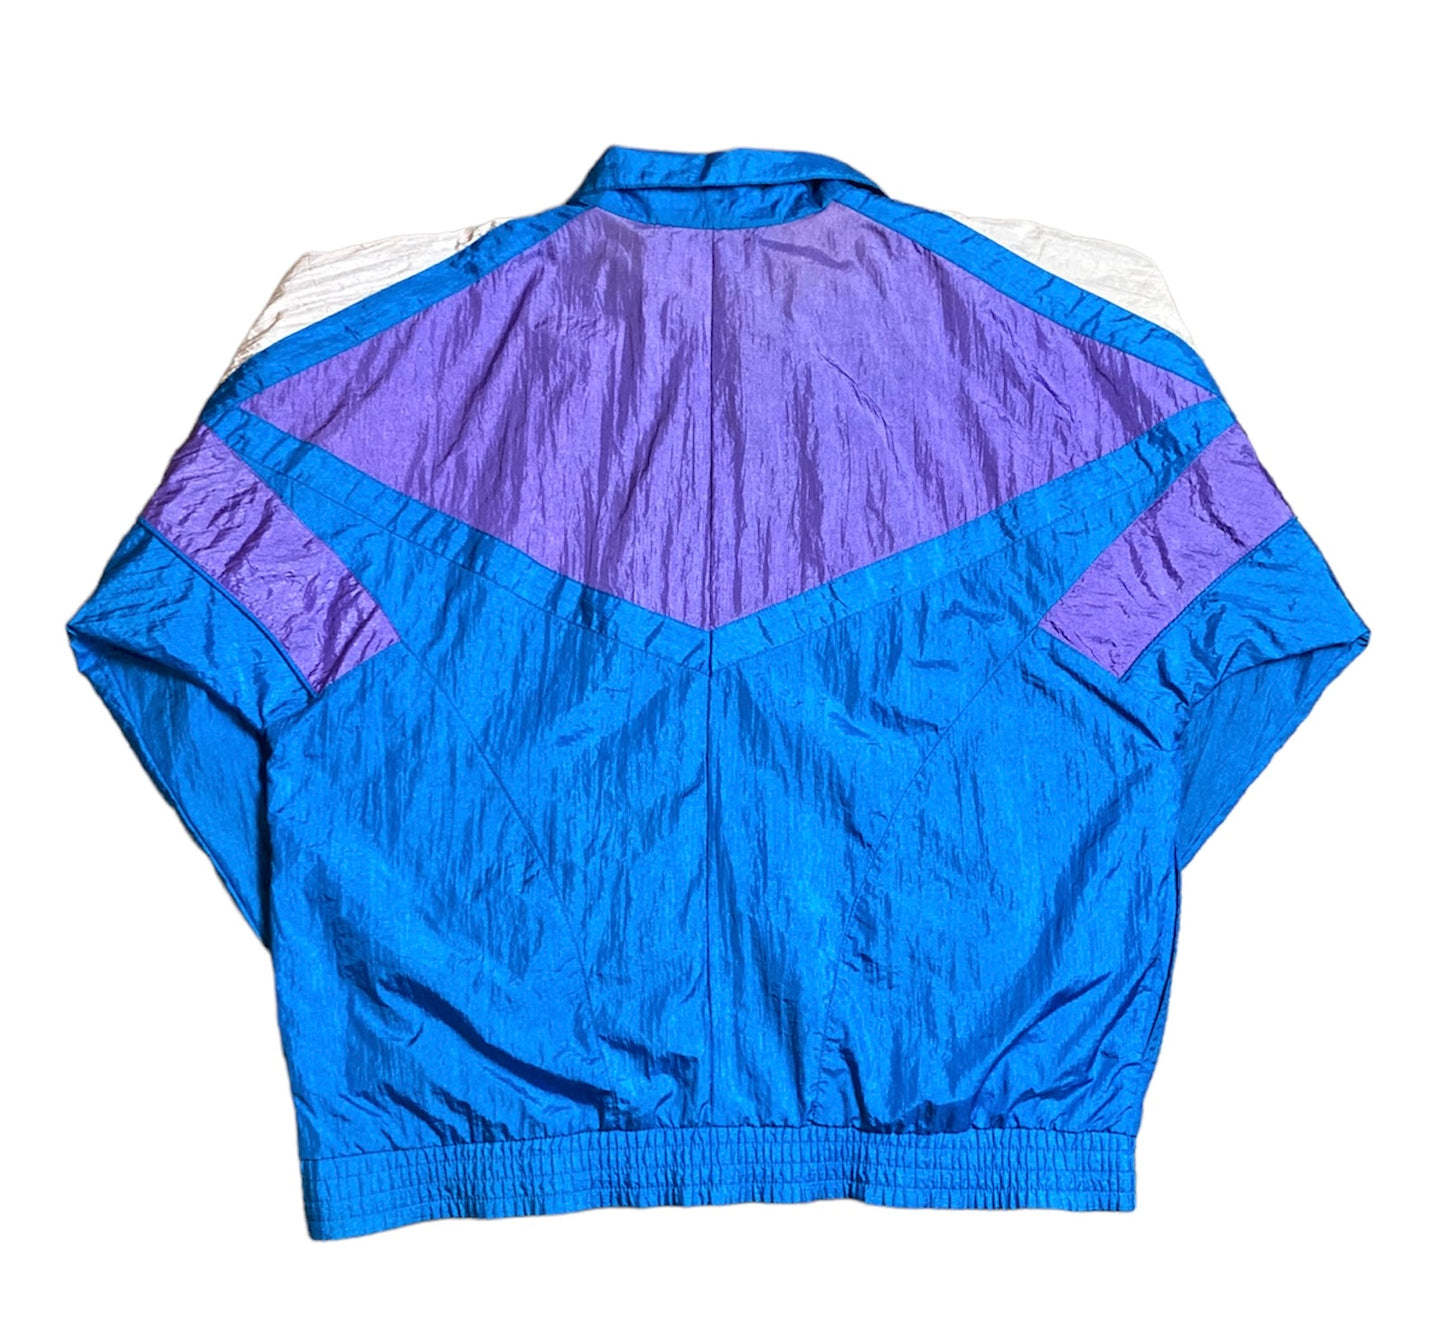 Vintage Colorful Windbreaker Jacket